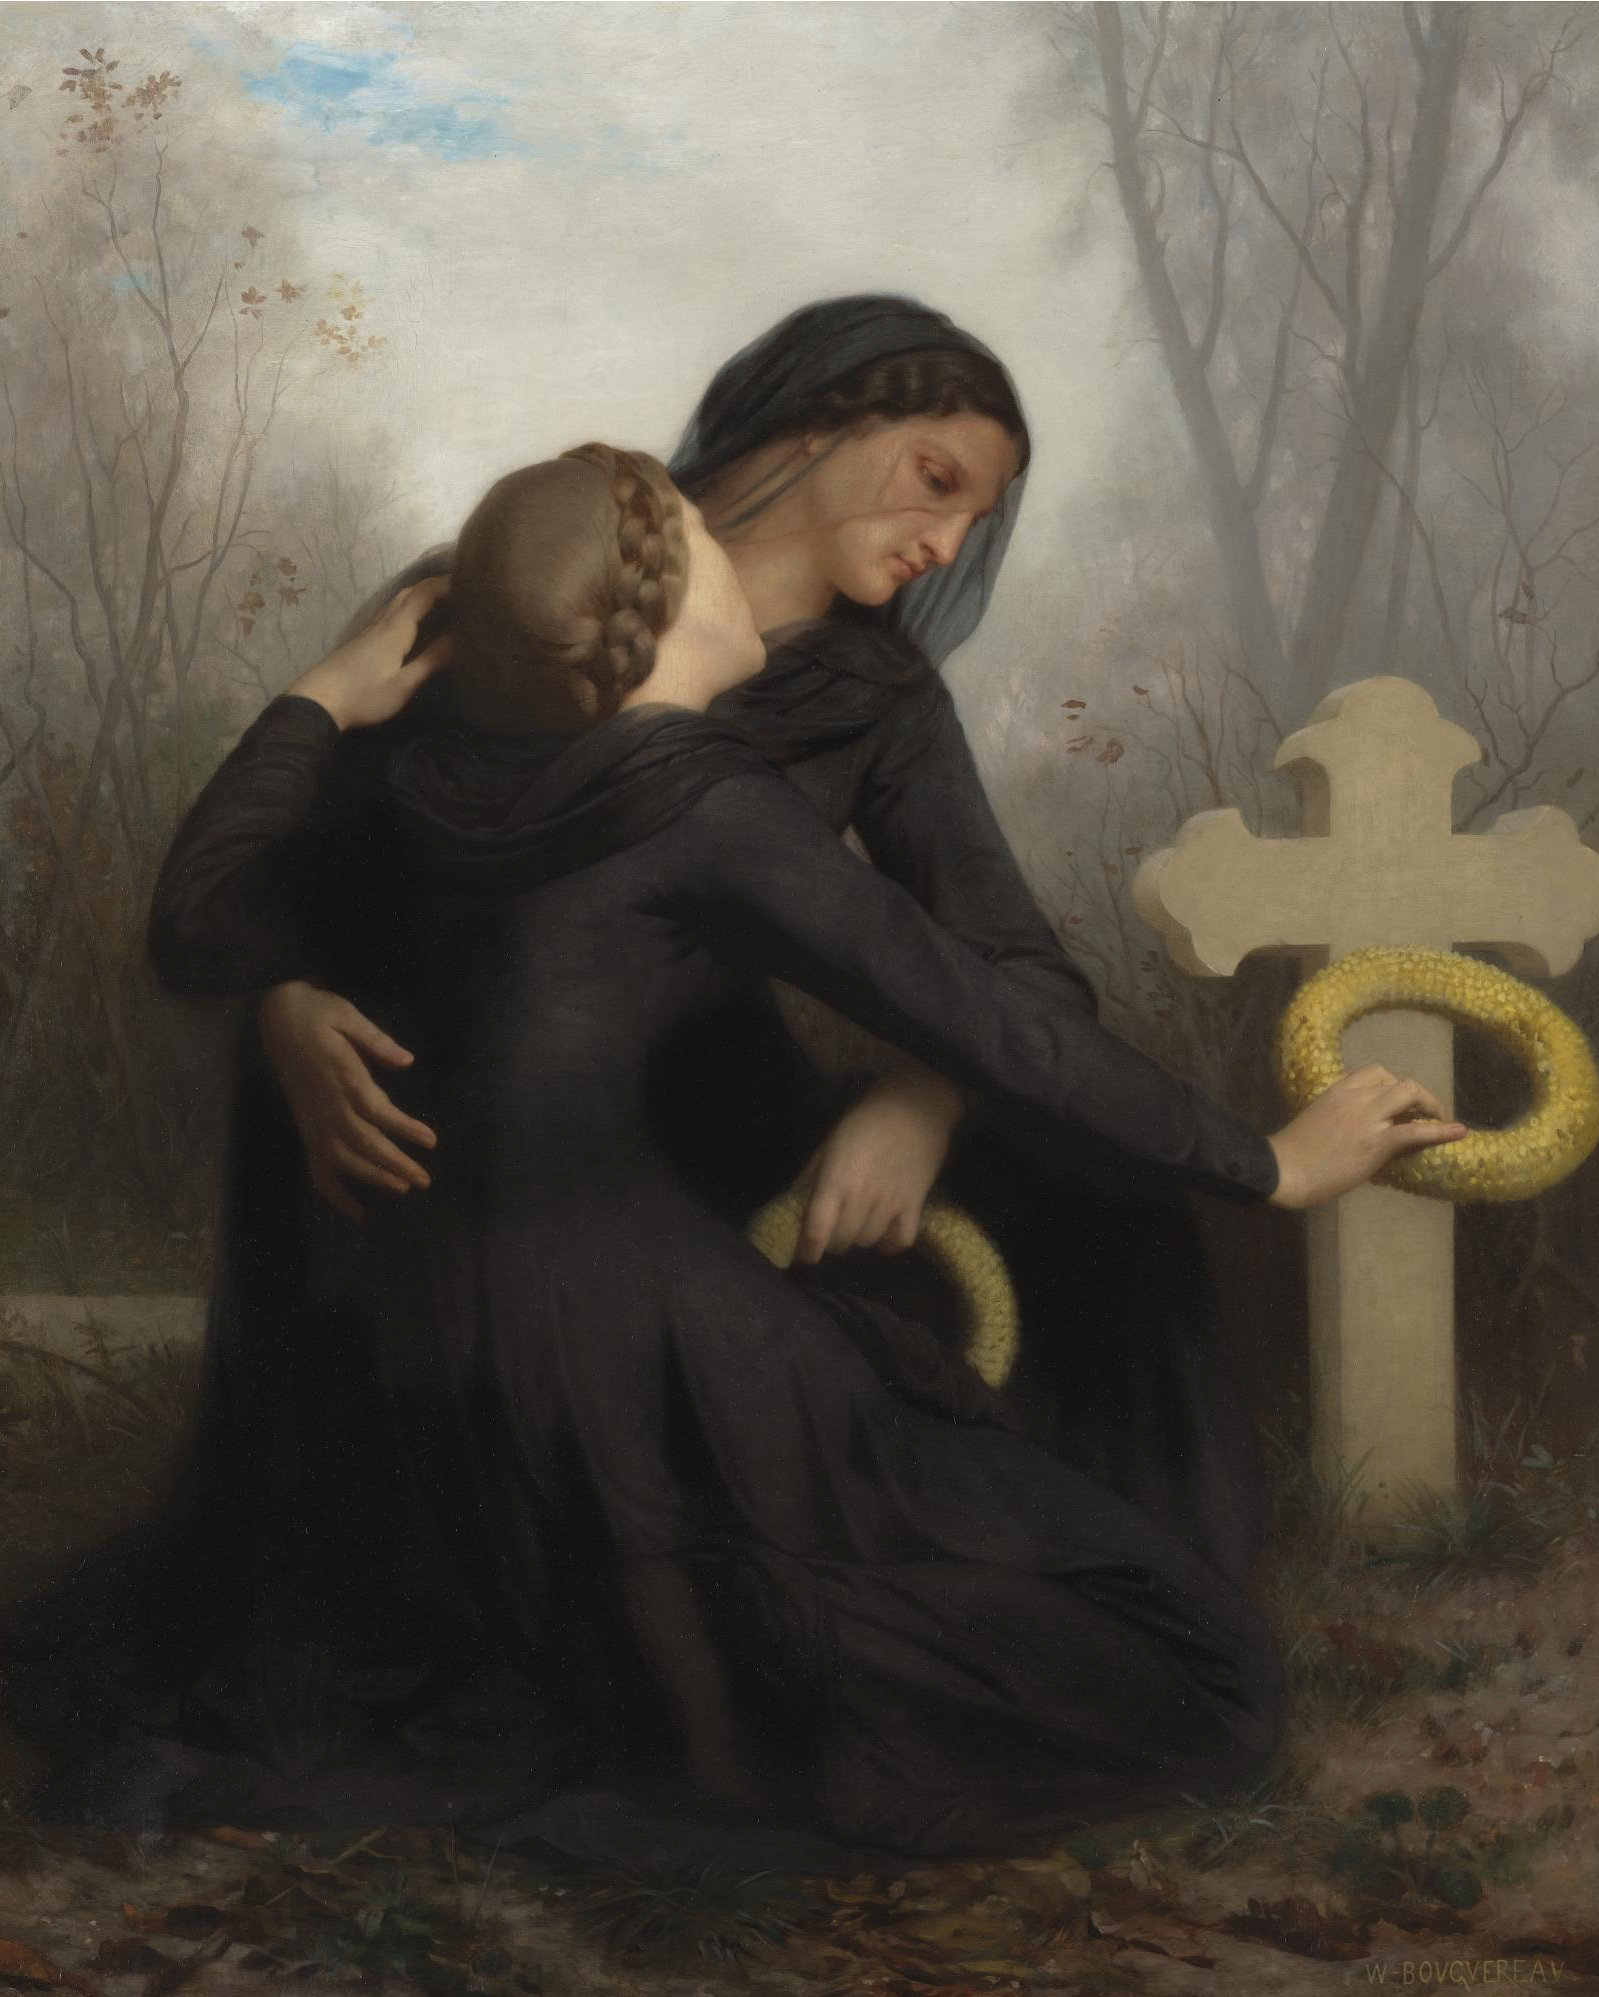 Le Jour des Morts by William-Adolphe Bouguereau, c. 1860 [Private collection]